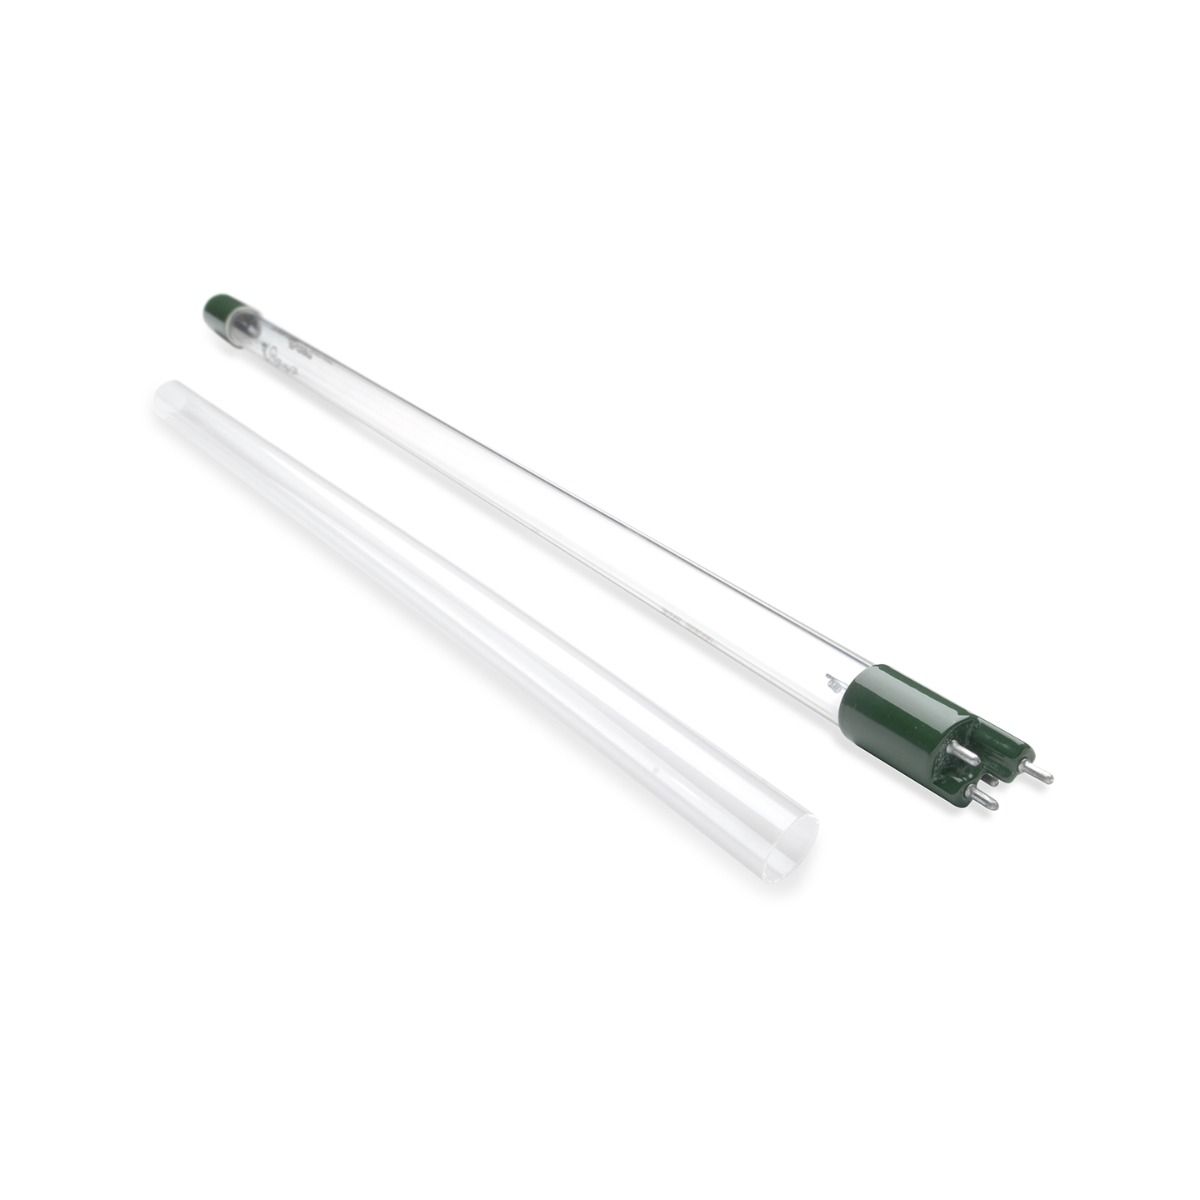 Viqua S810-QL Lamp/ Quartz Sleeve Combo Pack